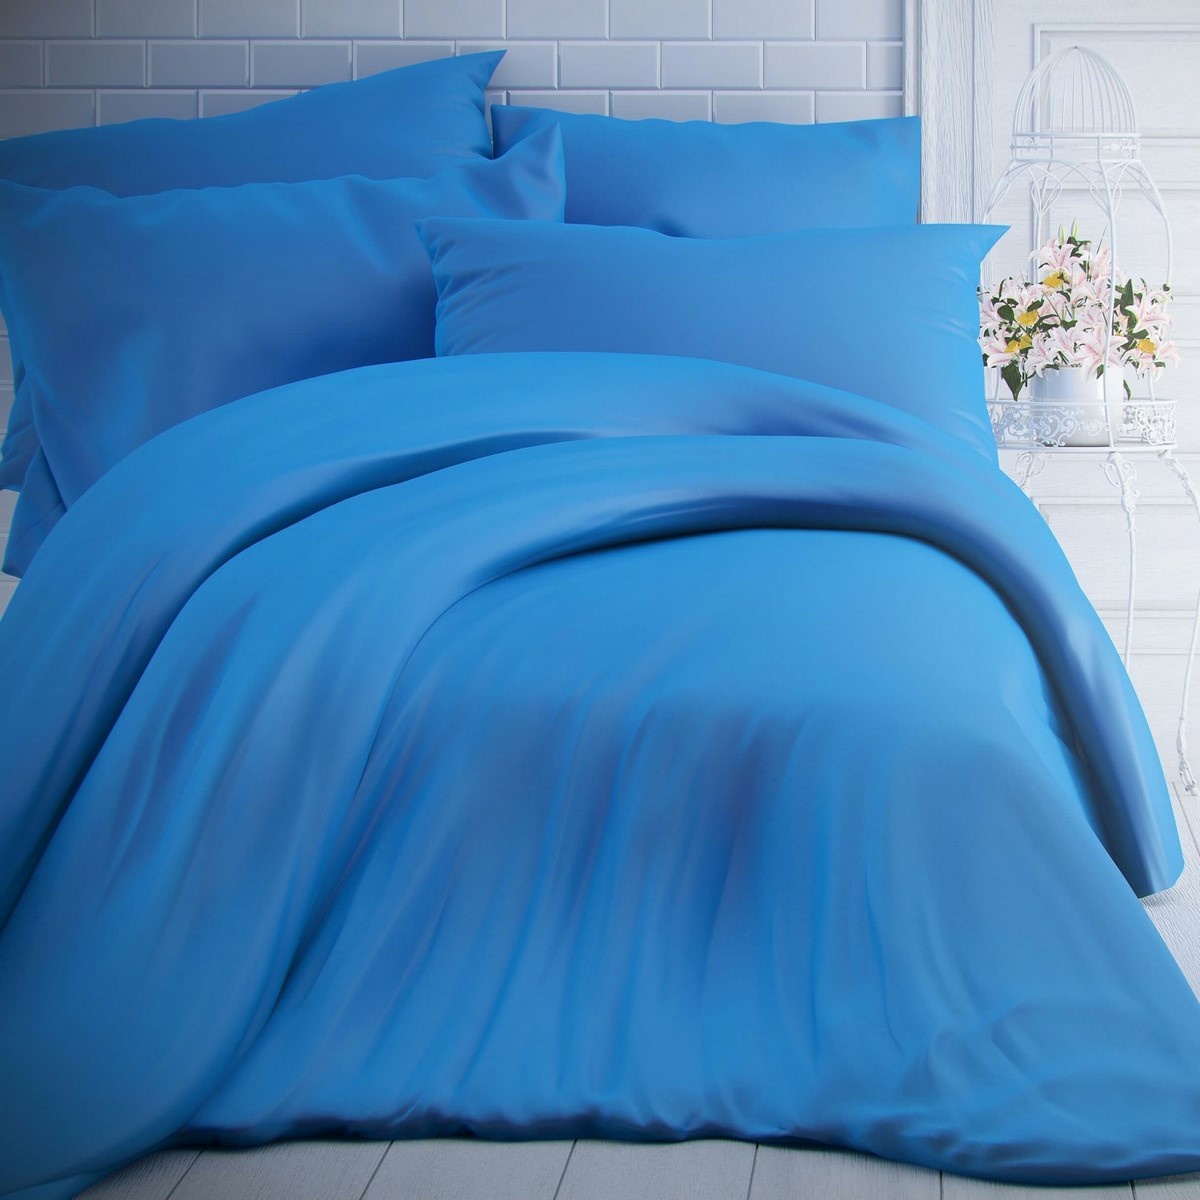 Kvalitex Lenjerie de pat din bumbac albastră, 240 x 200 cm, 2 buc. 70 x 90 cm, 240 x 200 cm, 2 buc. 70 x 90 cm